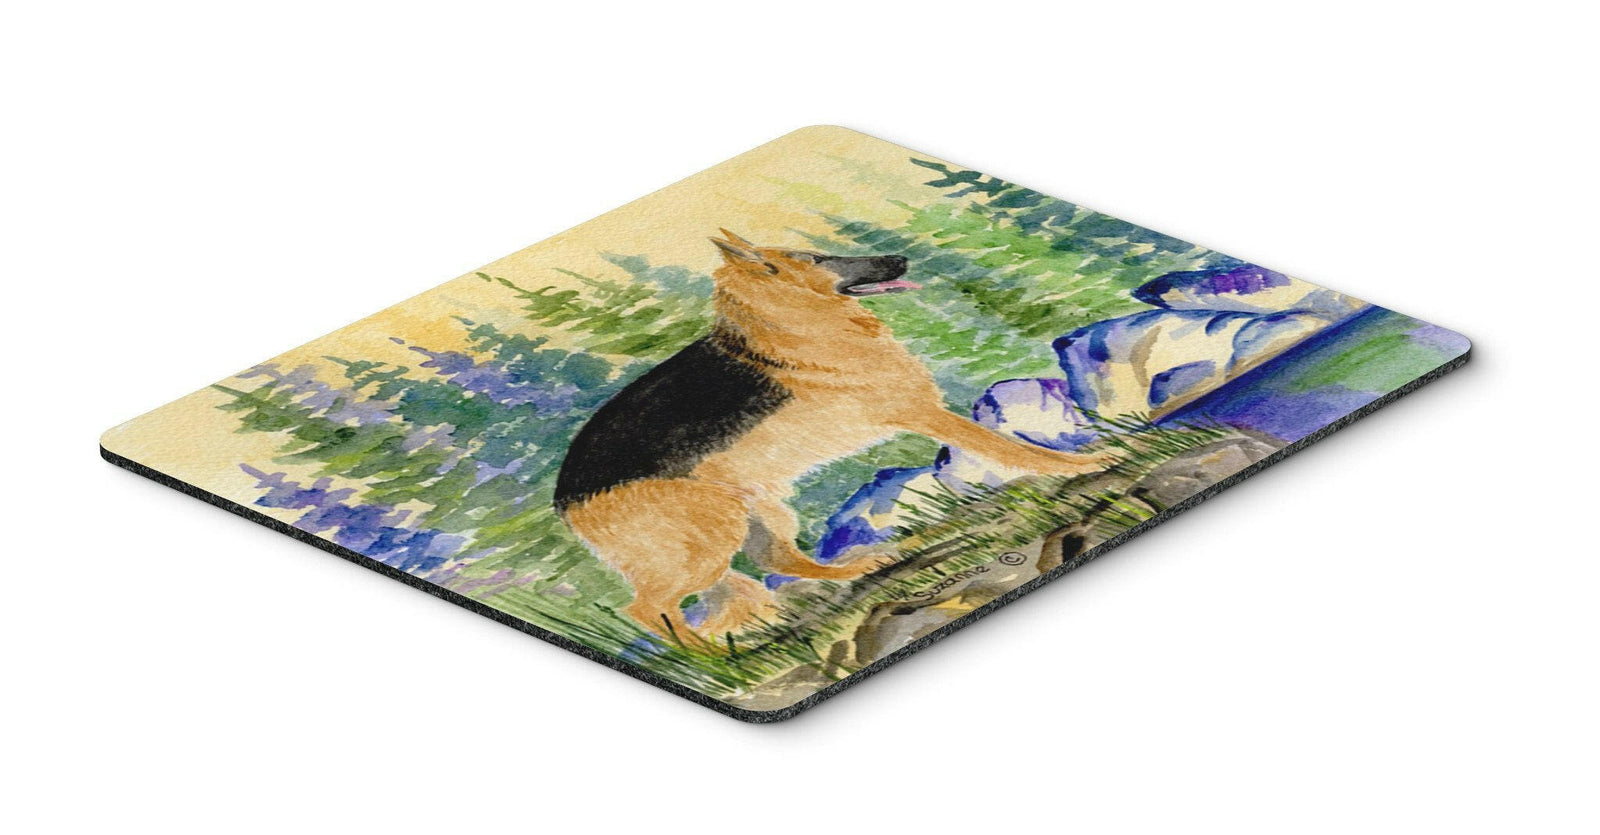 German Shepherd Mouse Pad / Hot Pad / Trivet by Caroline's Treasures